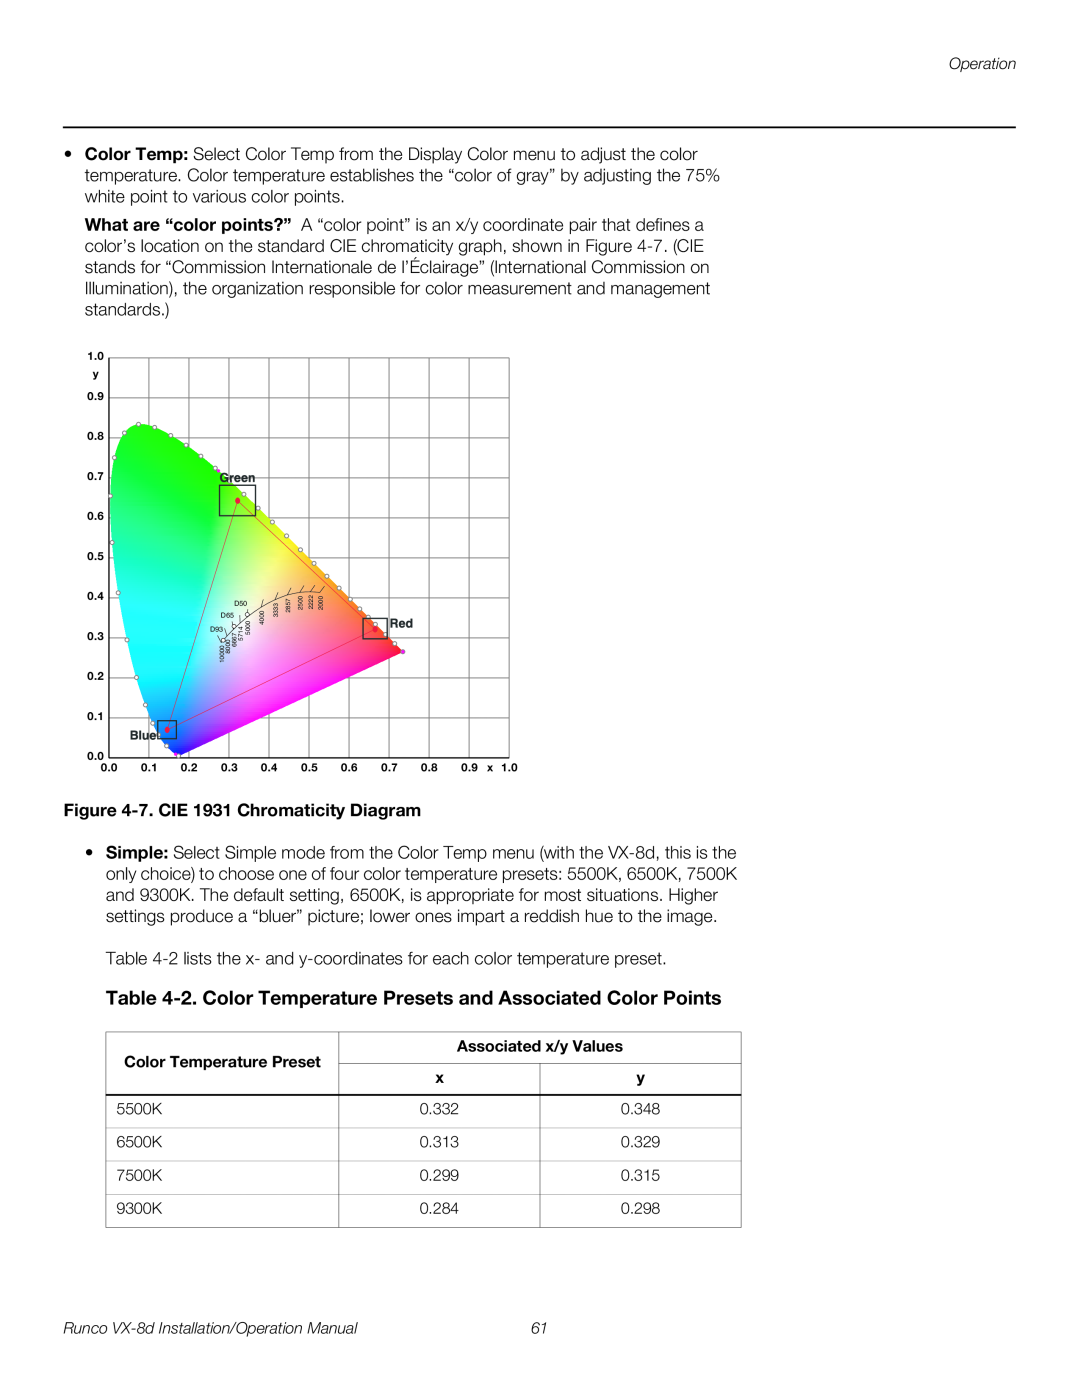 Runco VX-8D operation manual 2. Color Temperature Presets and Associated Color Points, 7. CIE 1931 Chromaticity Diagram 